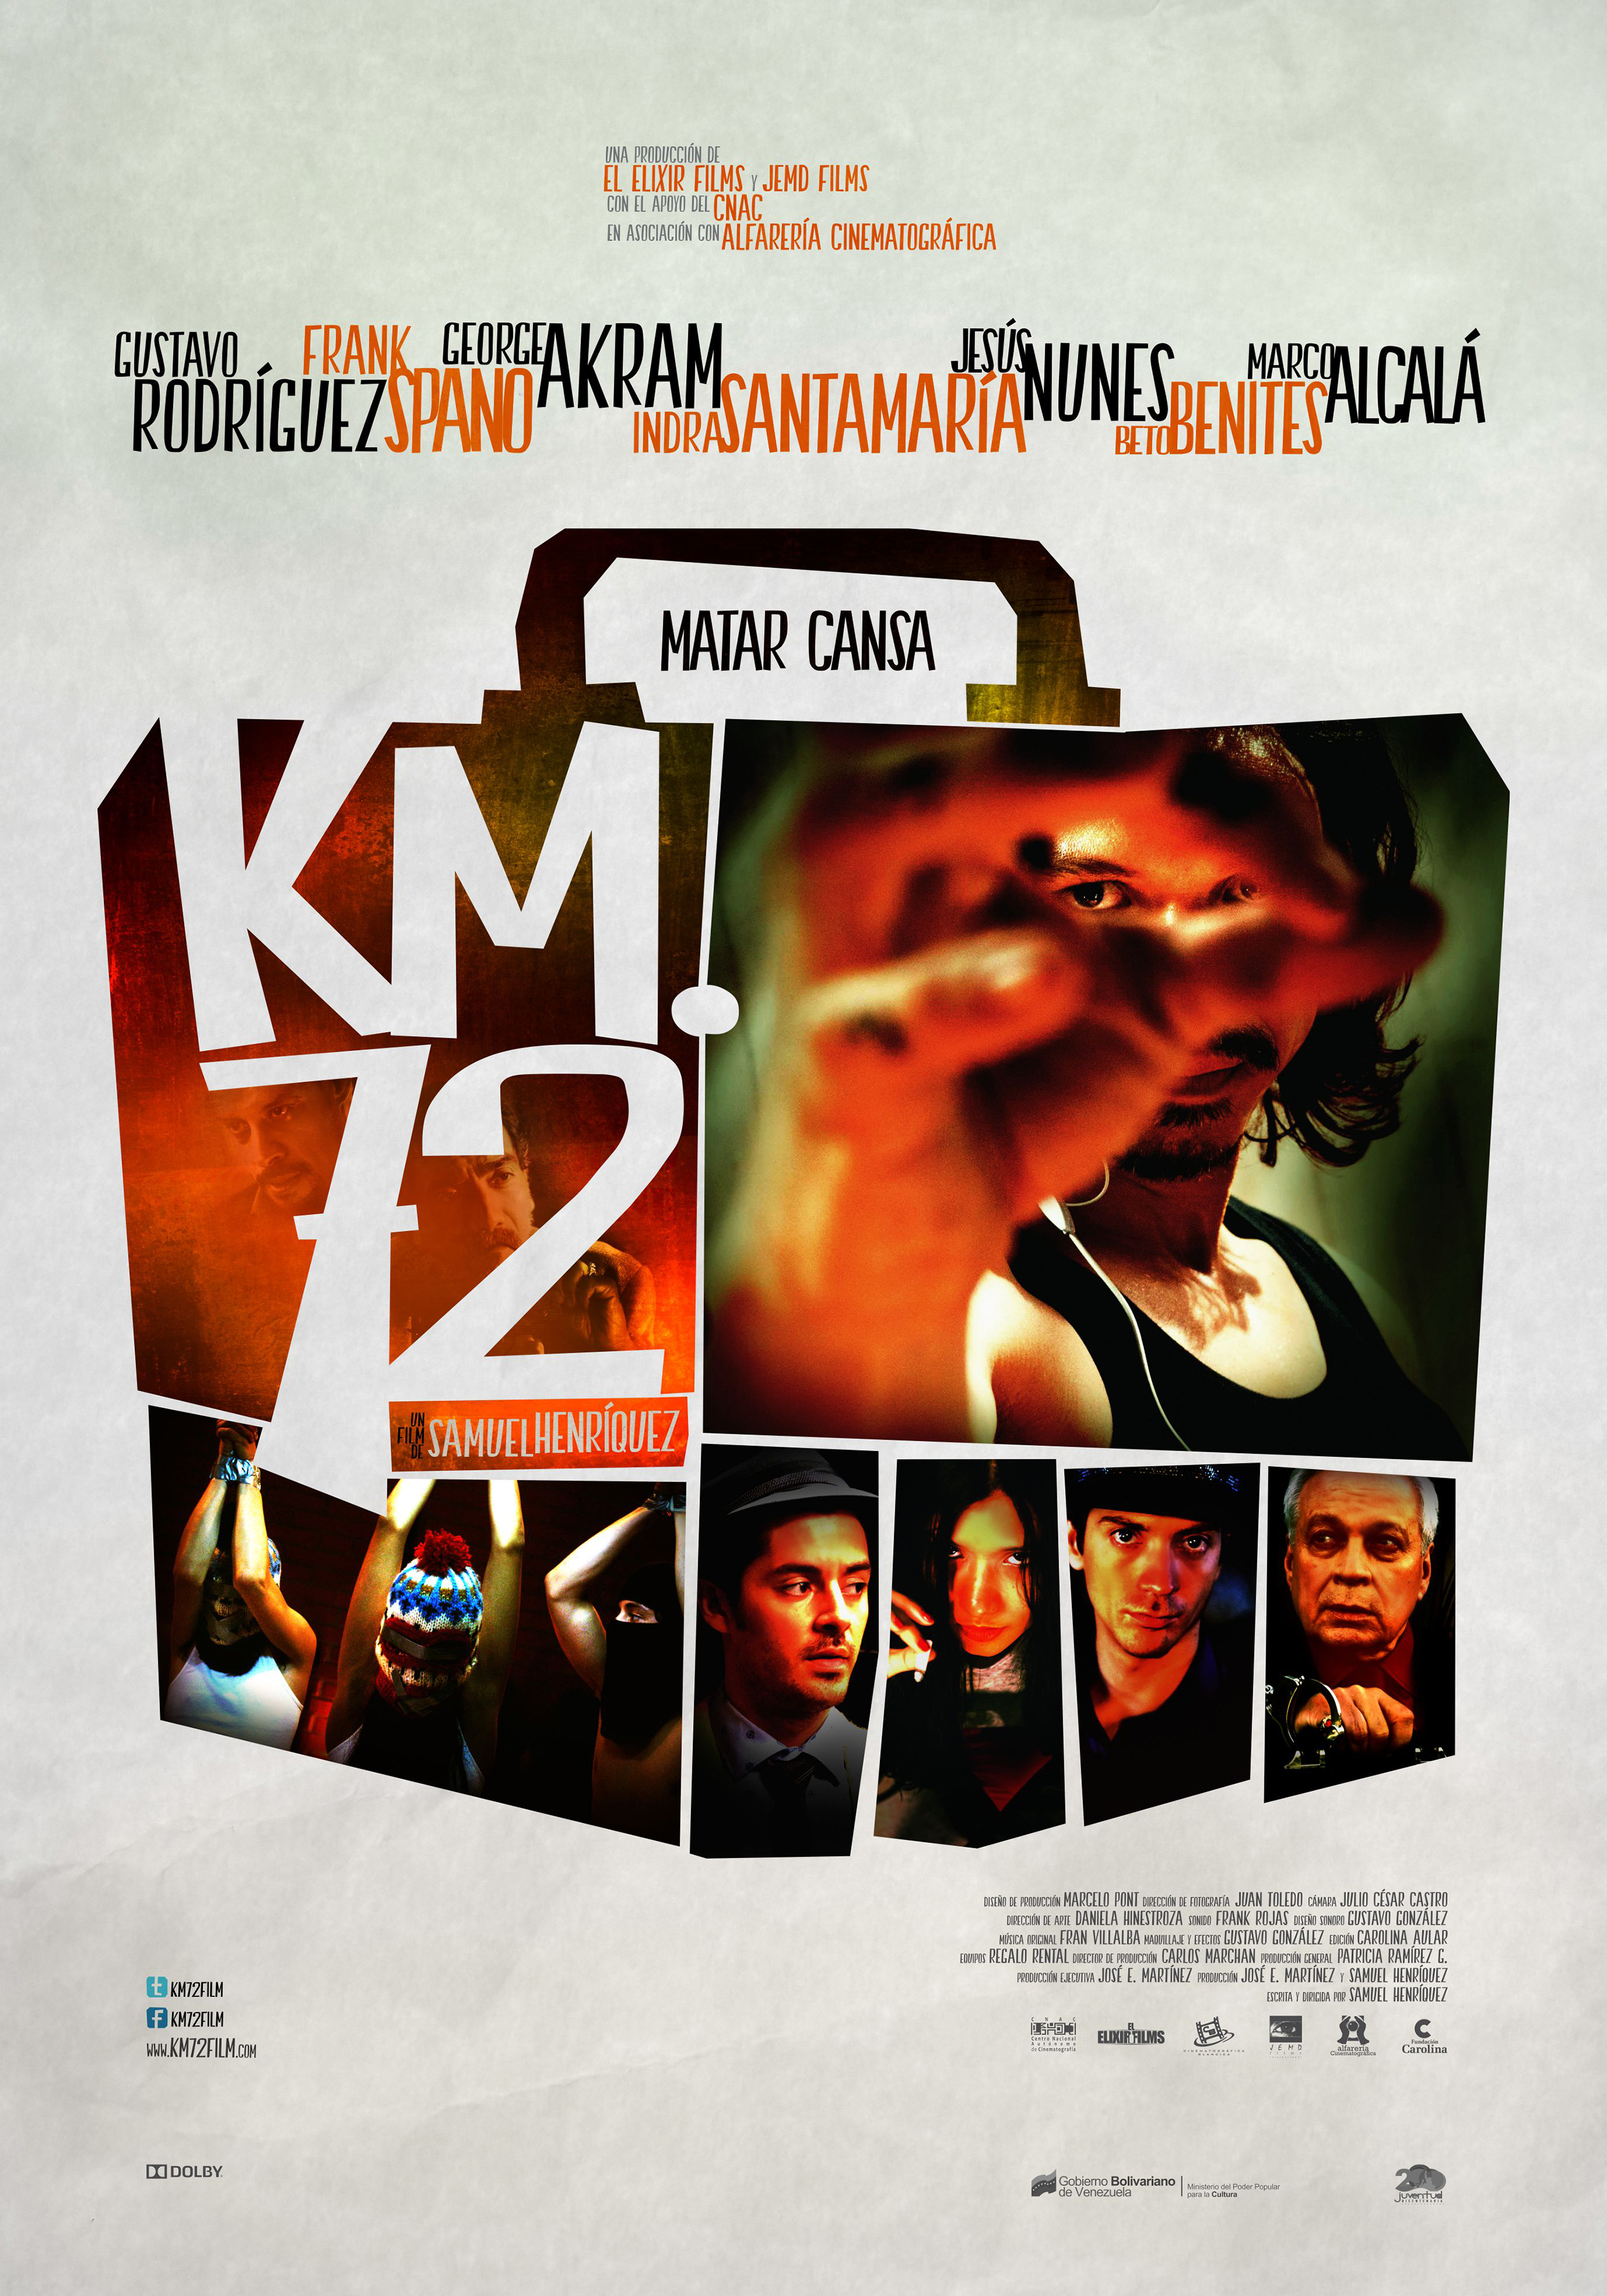 KM 72